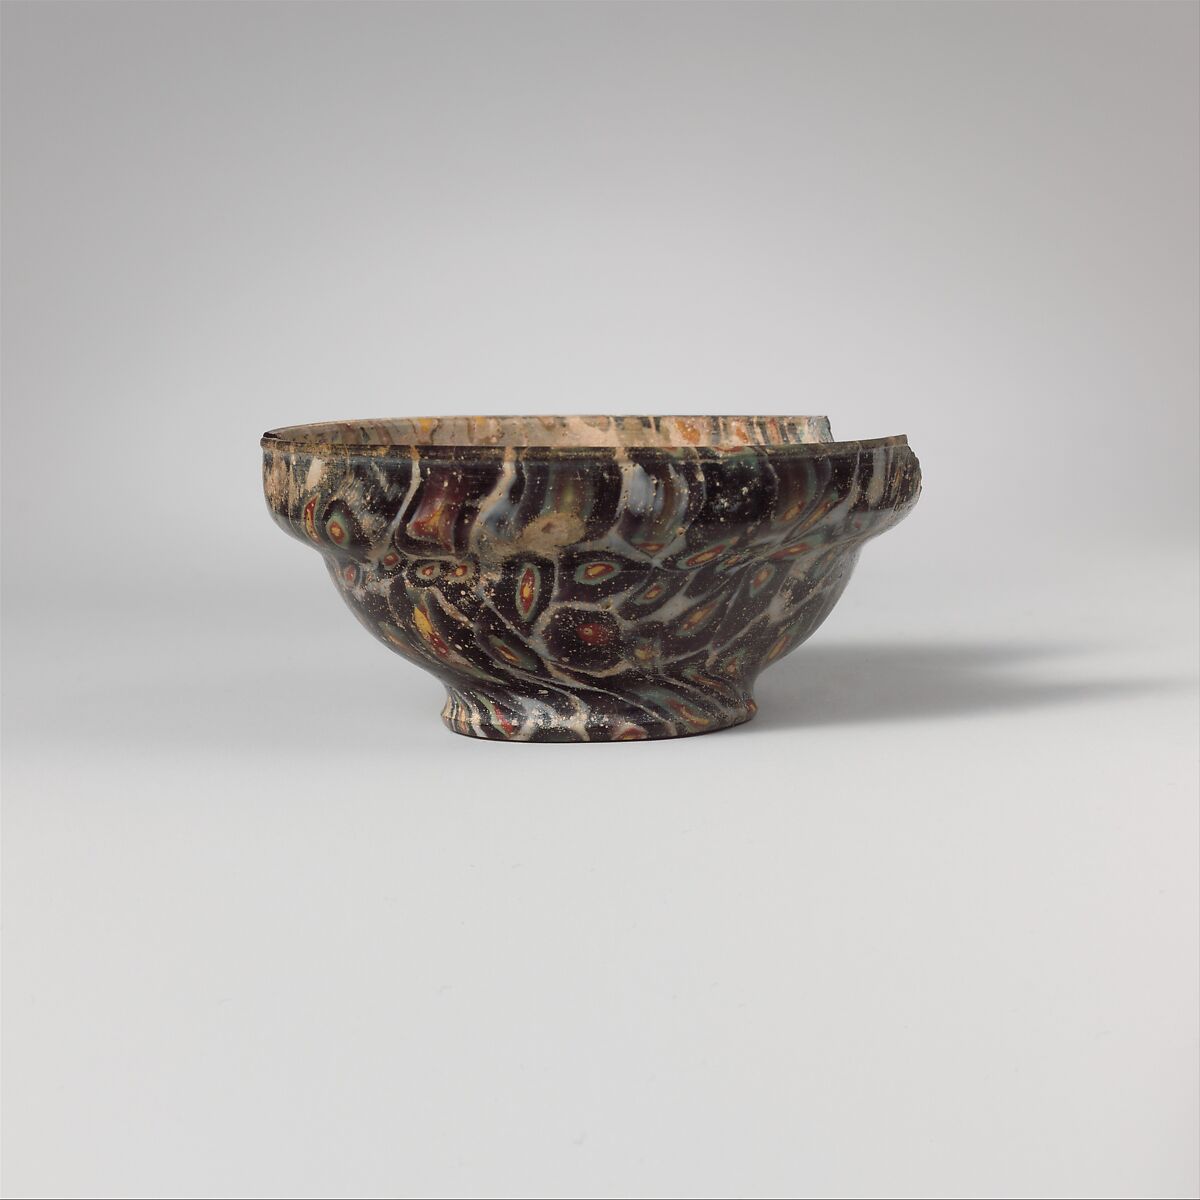 Glass mosaic carinated bowl, Glass, Roman, probably Italian 